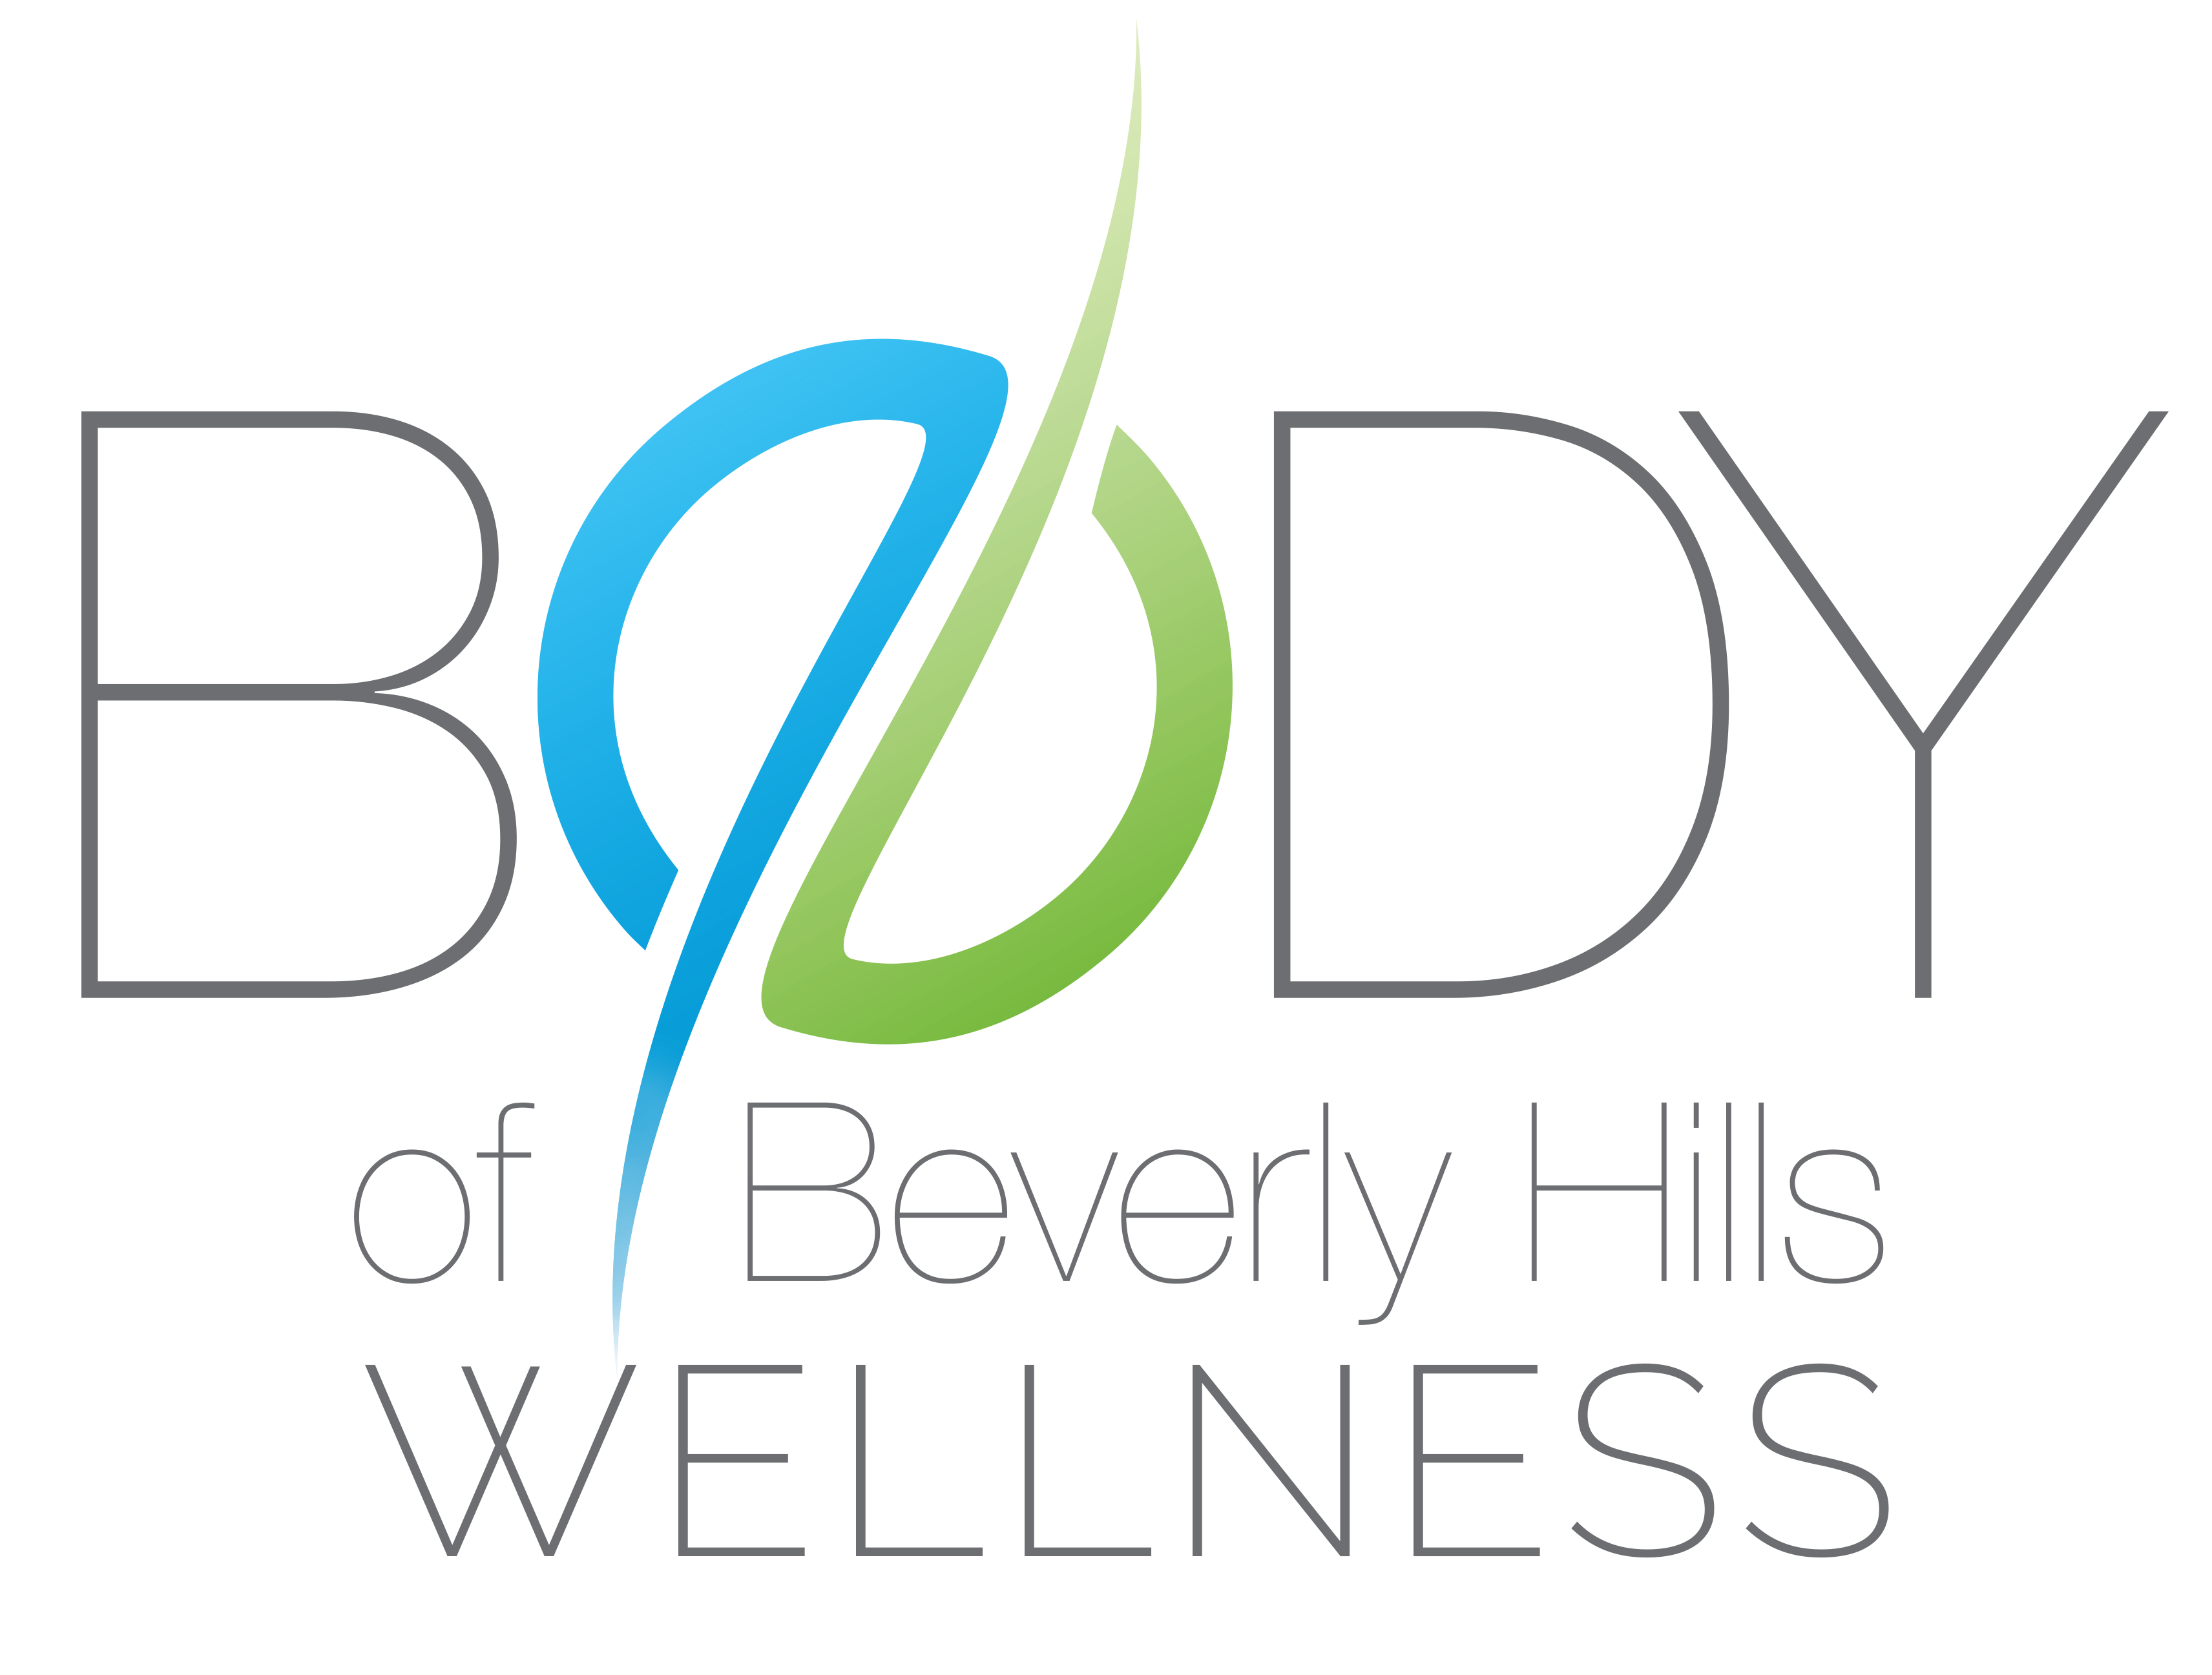 Body of Beverly Hills Wellness